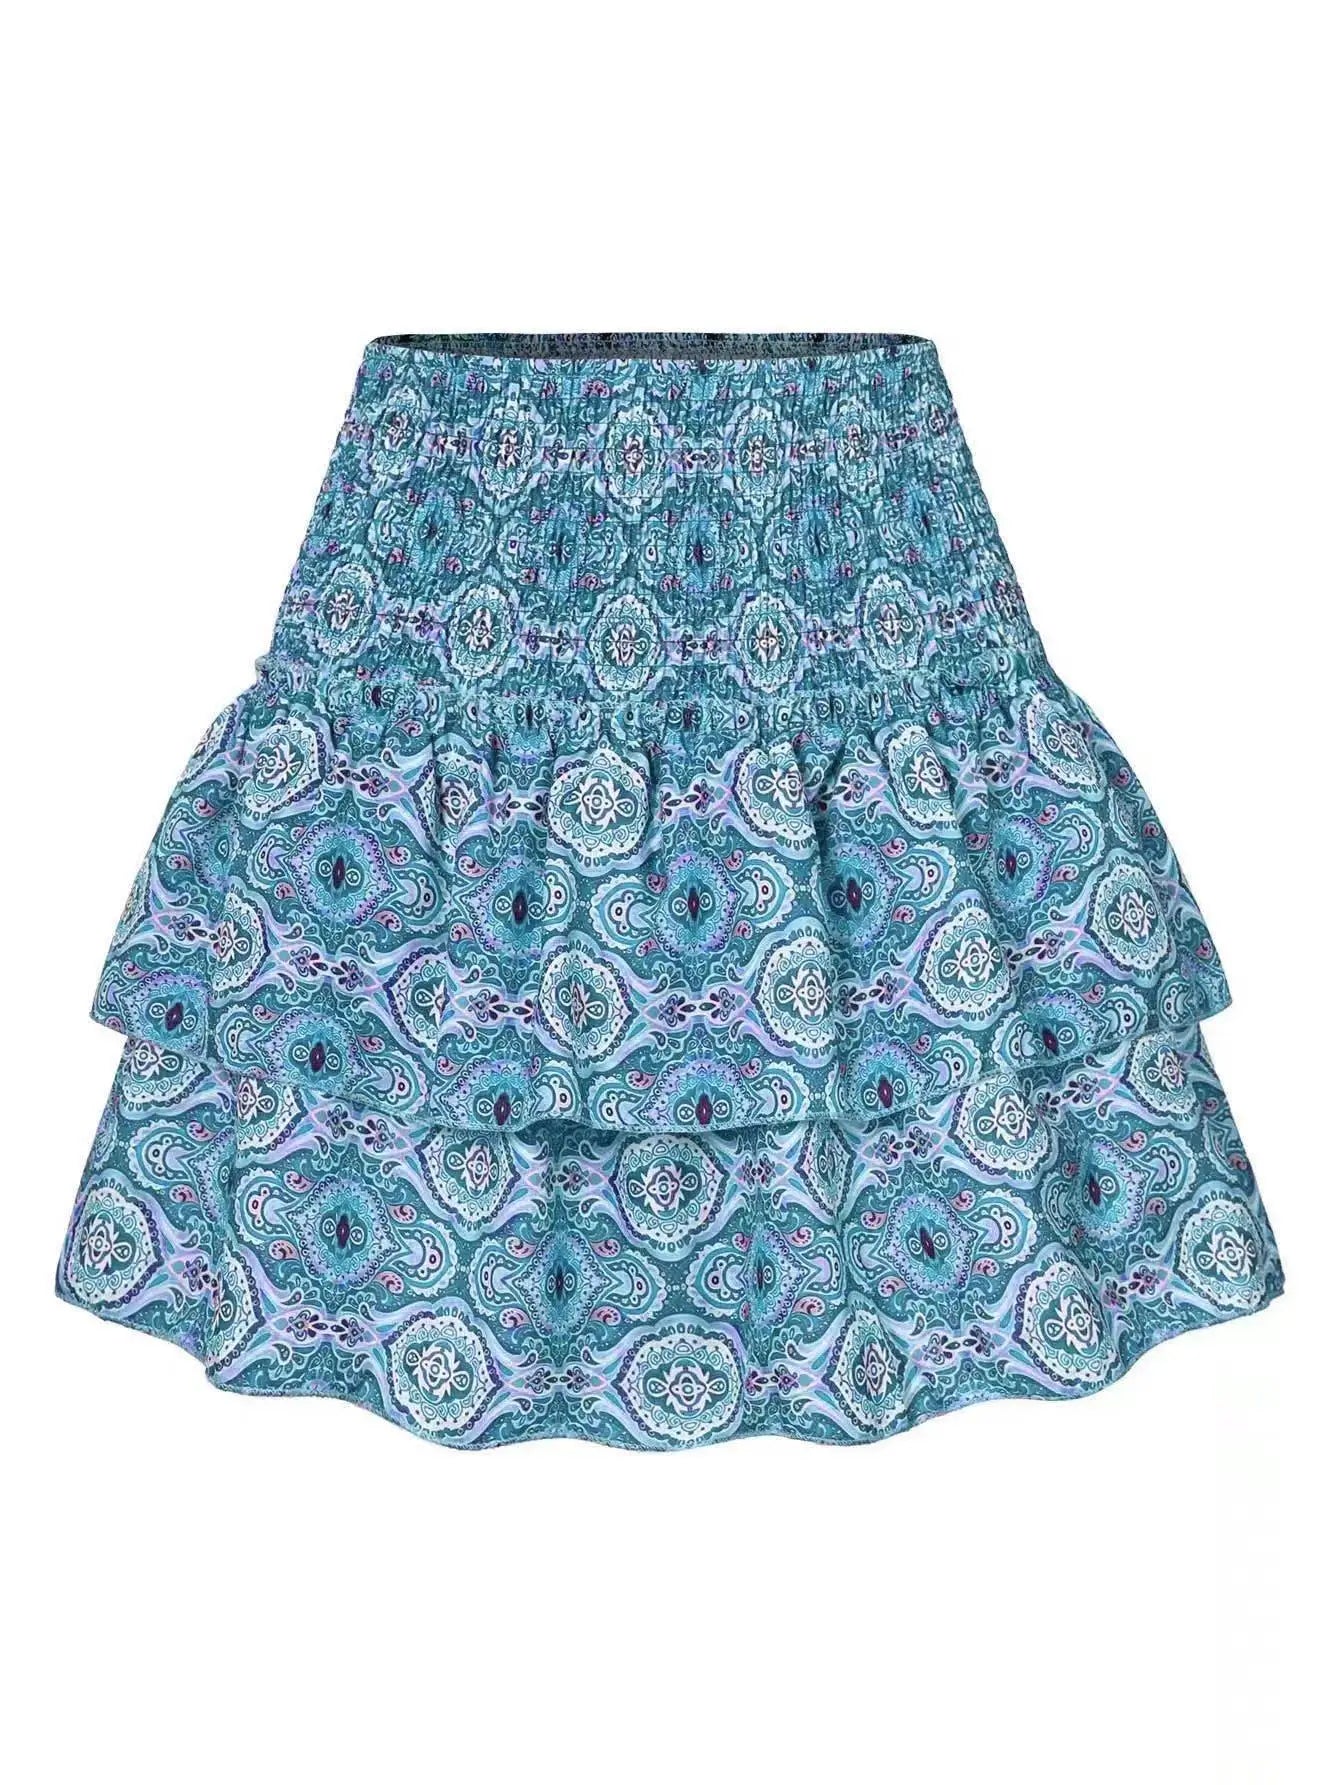 Mini Skirts- Express Your Style in Vibrant Layered Mini Skirt- - Pekosa Women Fashion